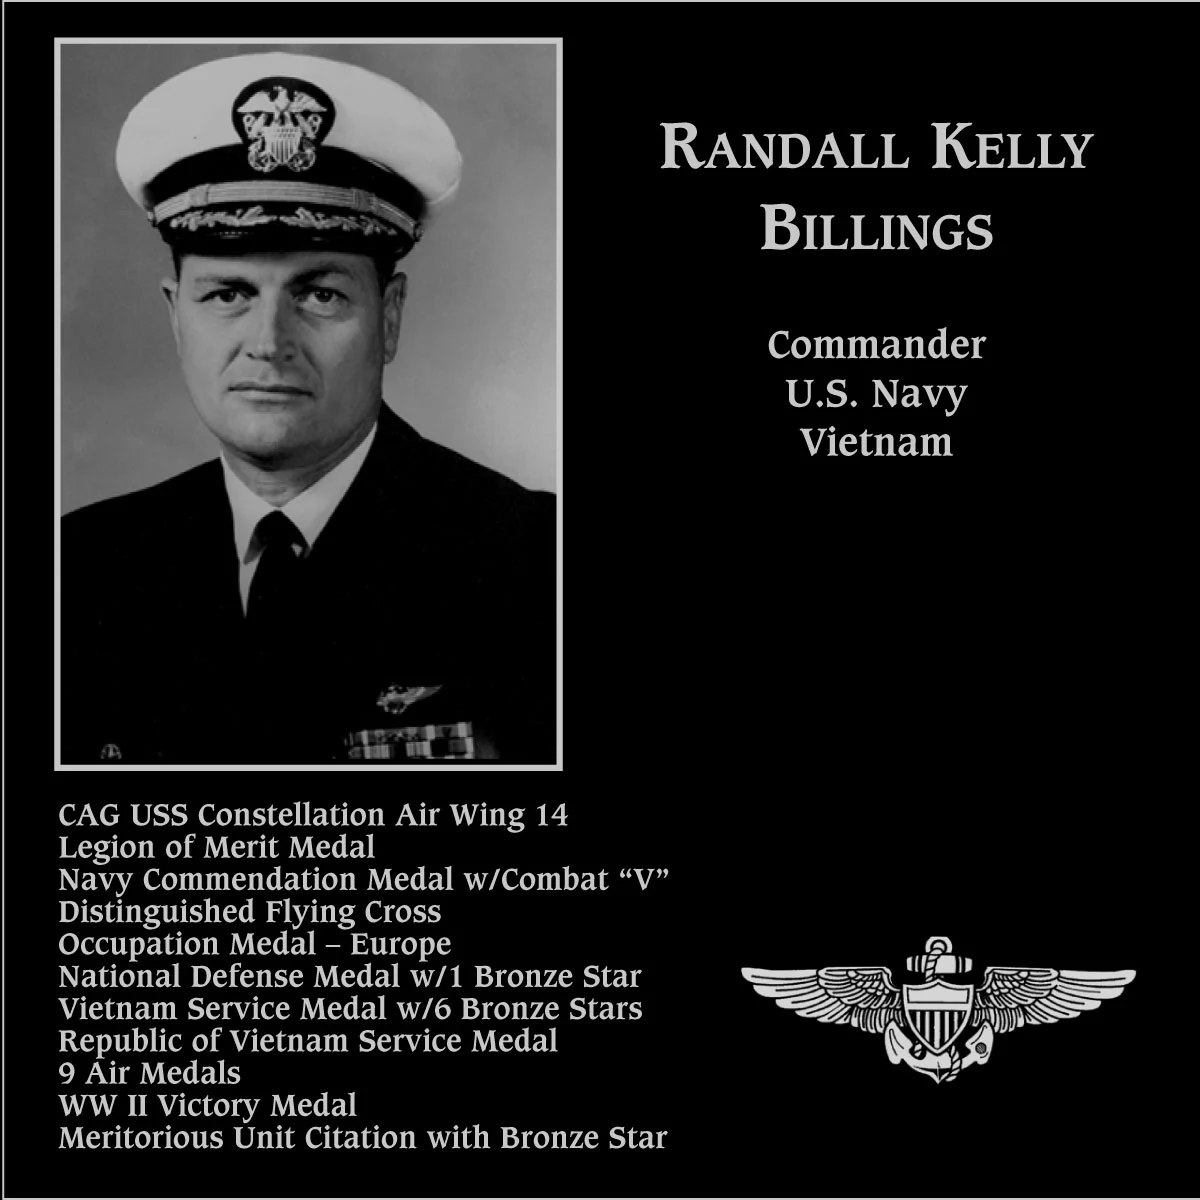 Randall Kelly Billings